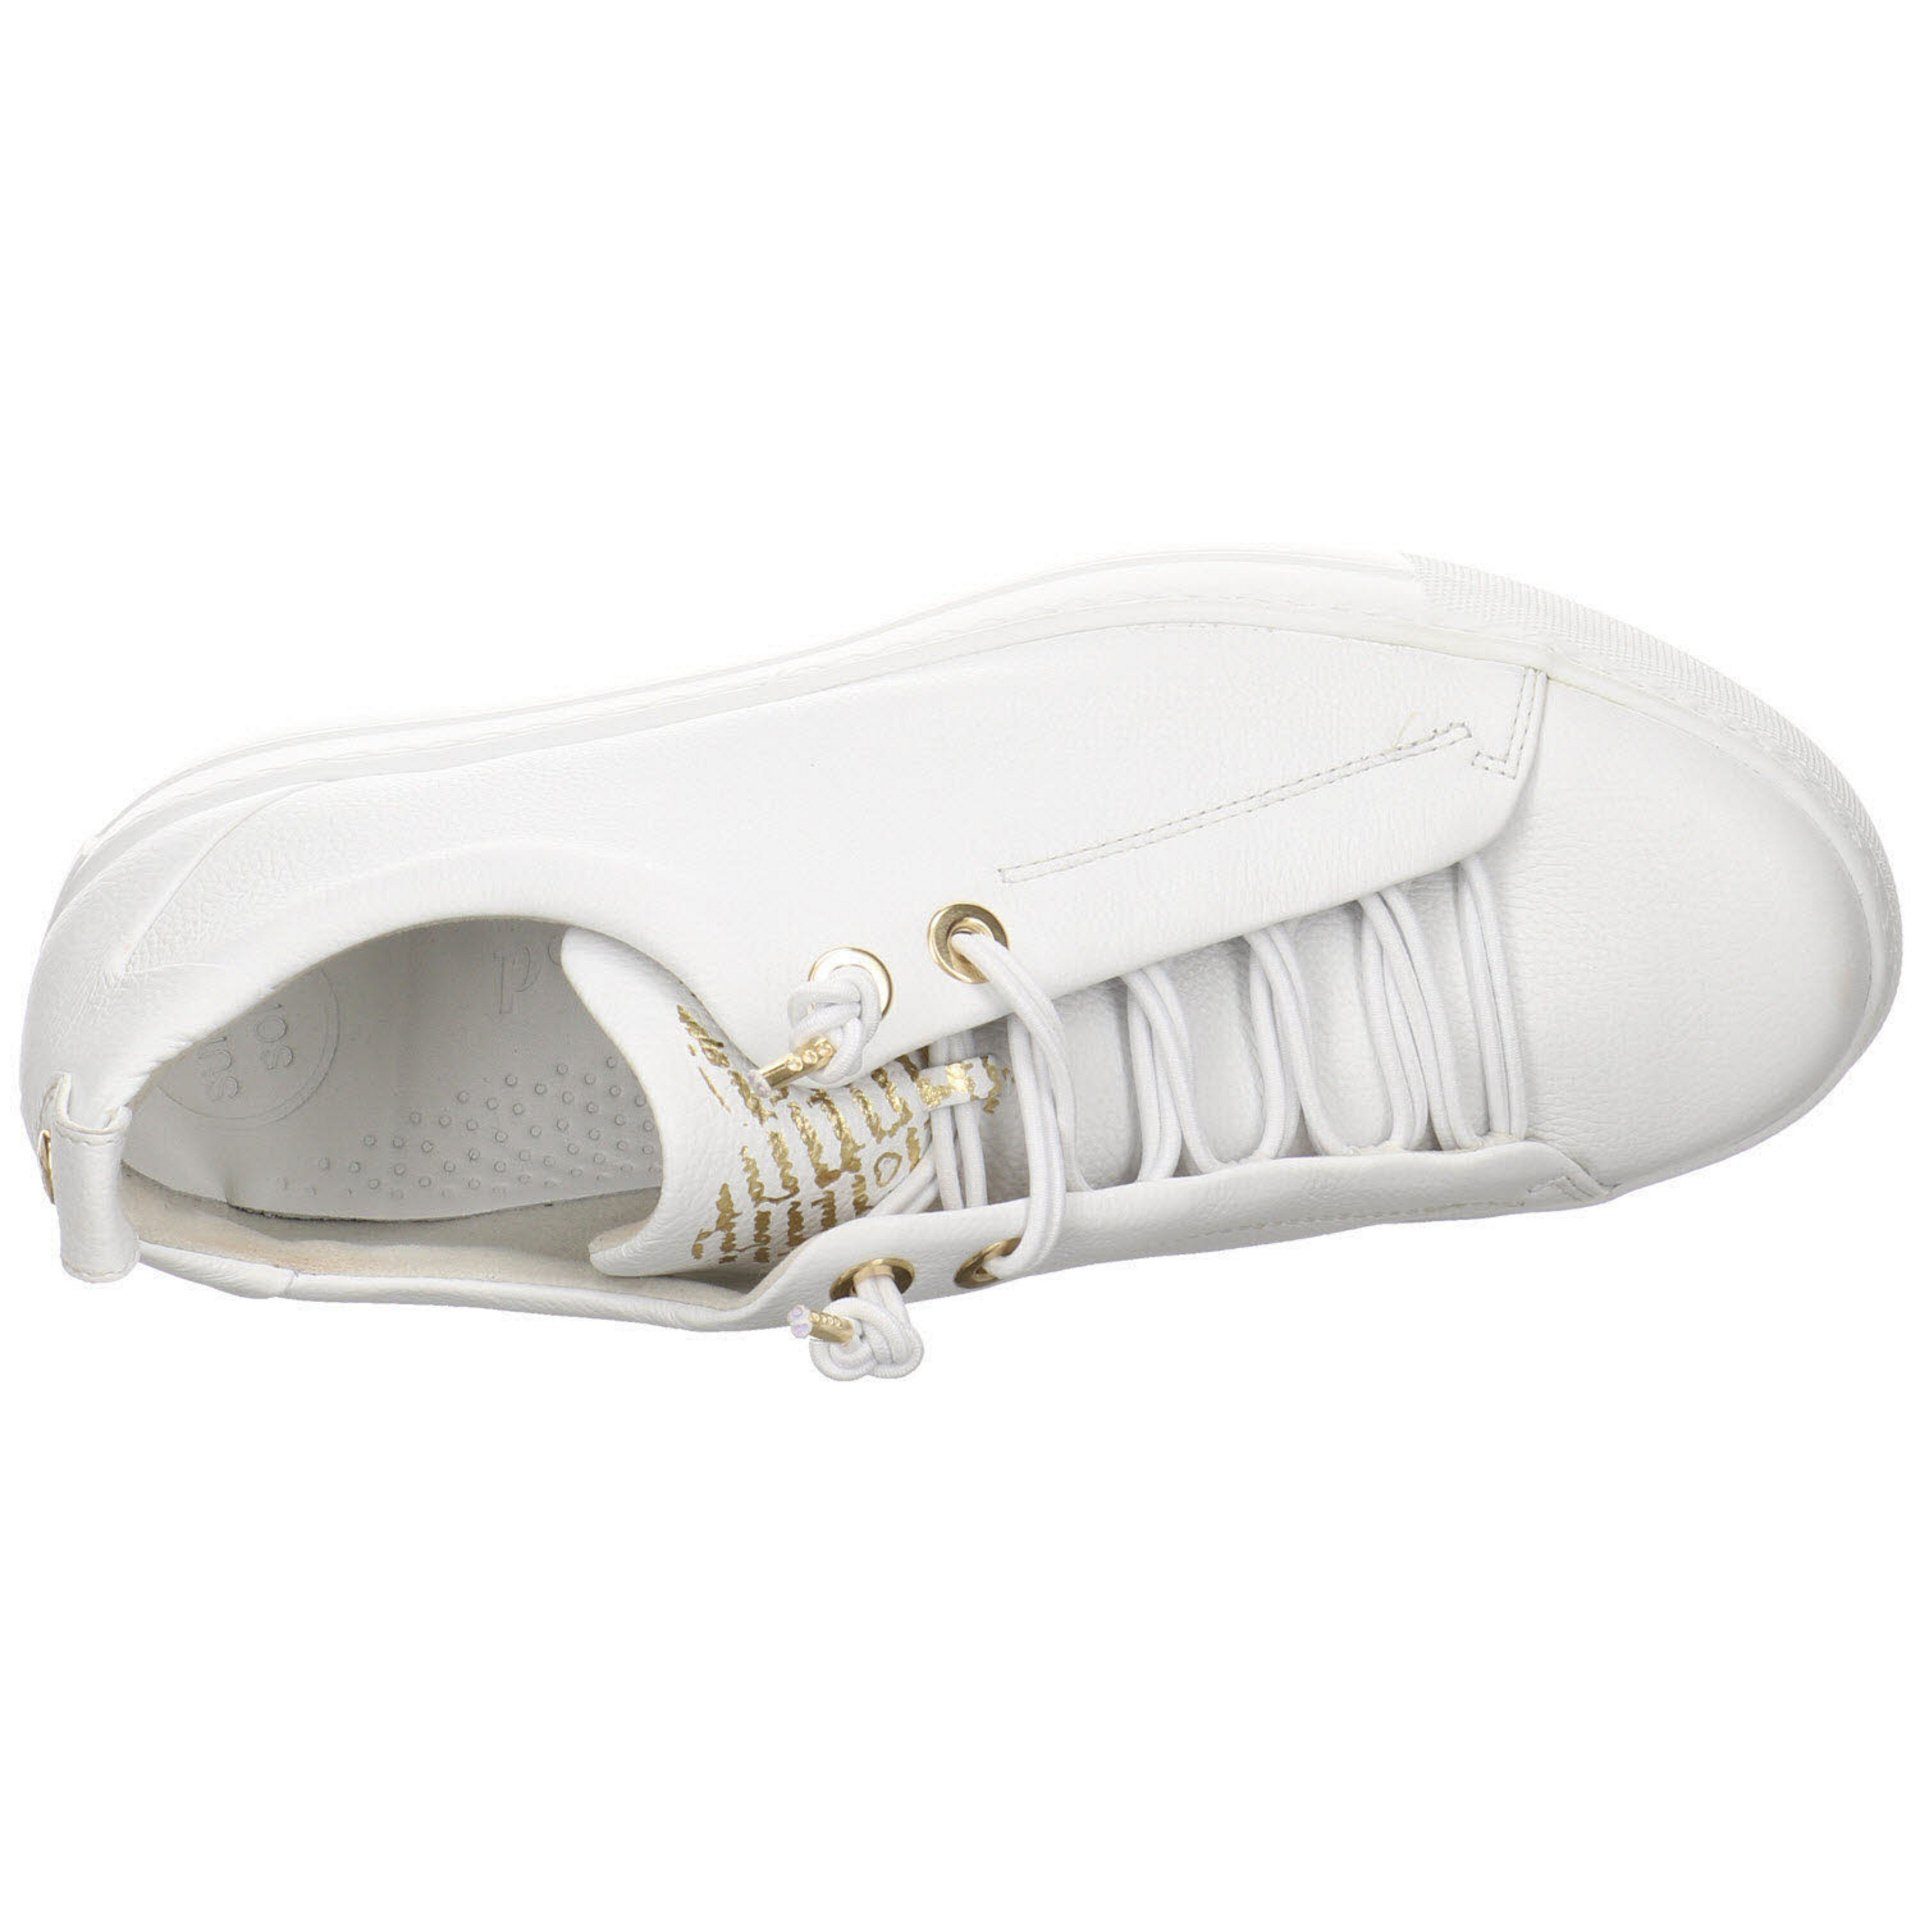 Damen Glattleder white/gold Paul Sneaker Slip-On Schnürschuh Sneaker Green Schuhe